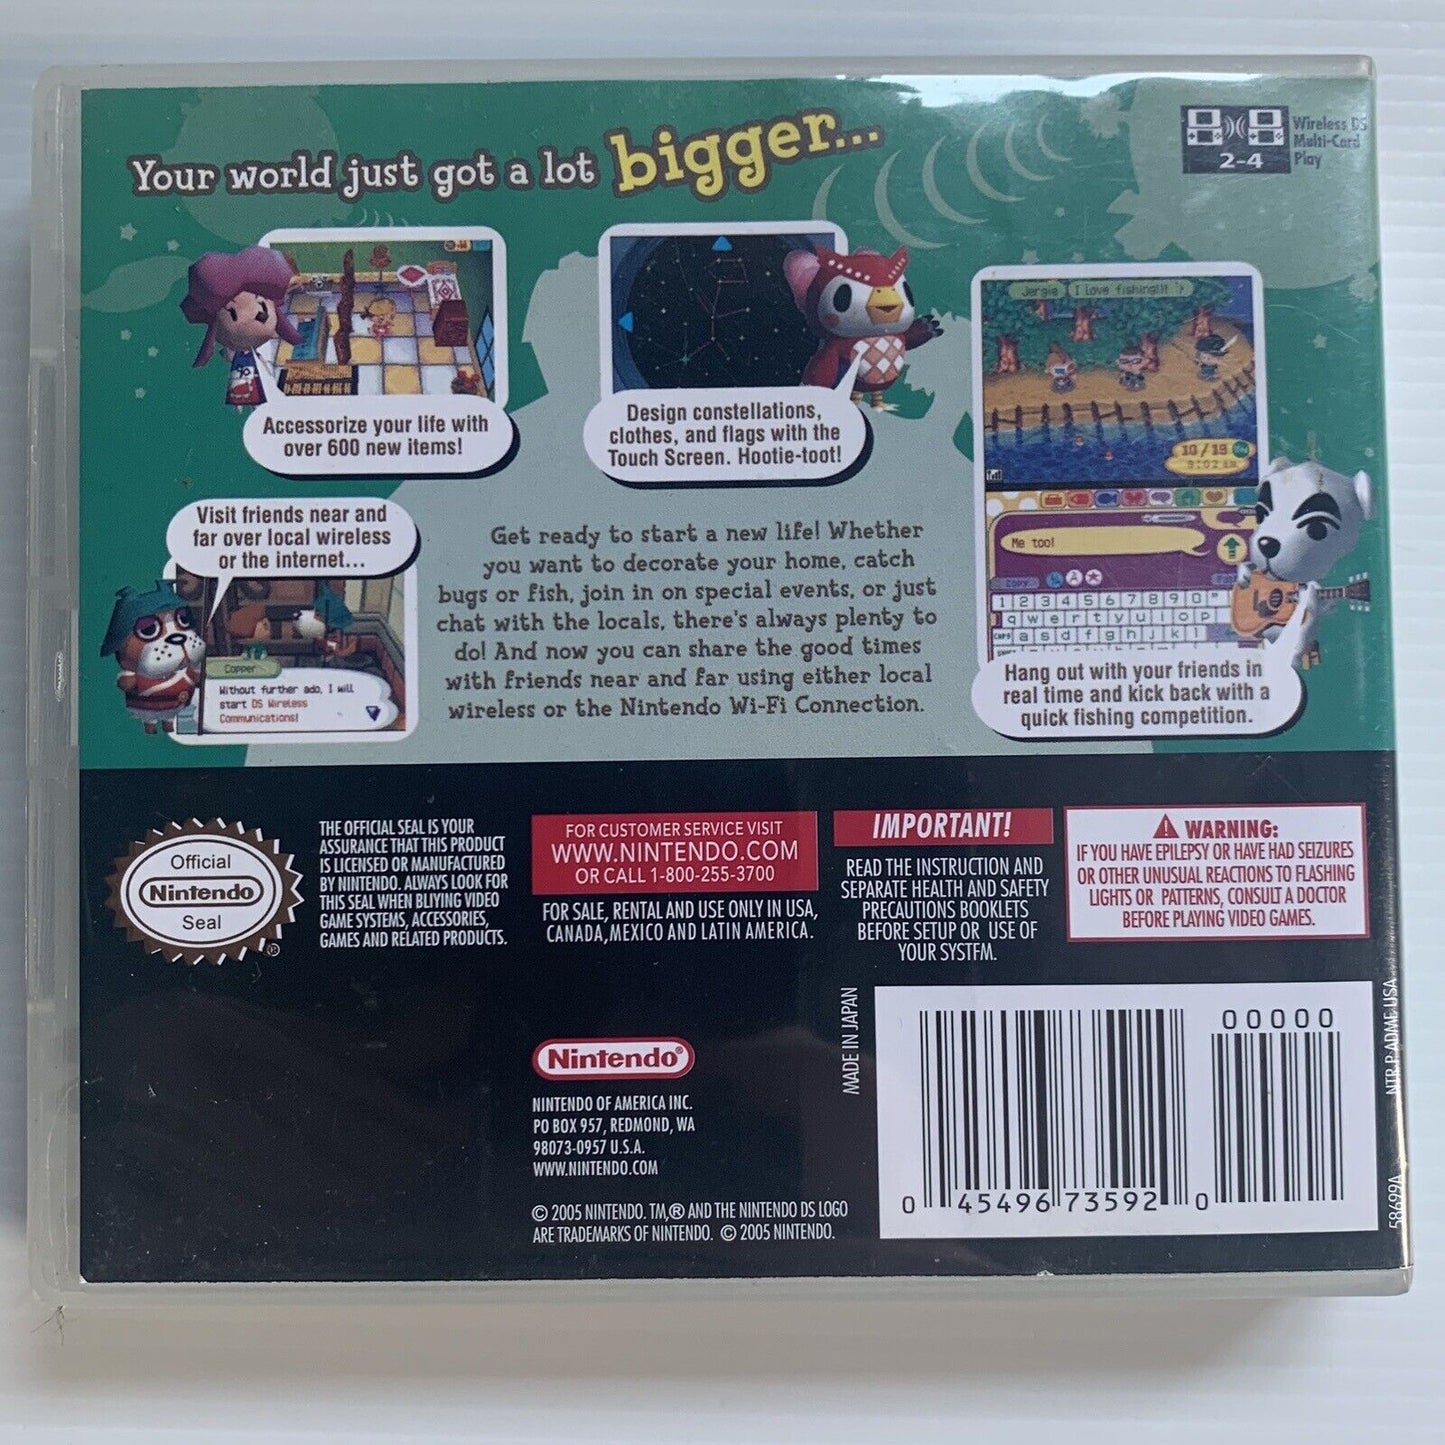 Animal Crossing Wild World Game Nintendo DS